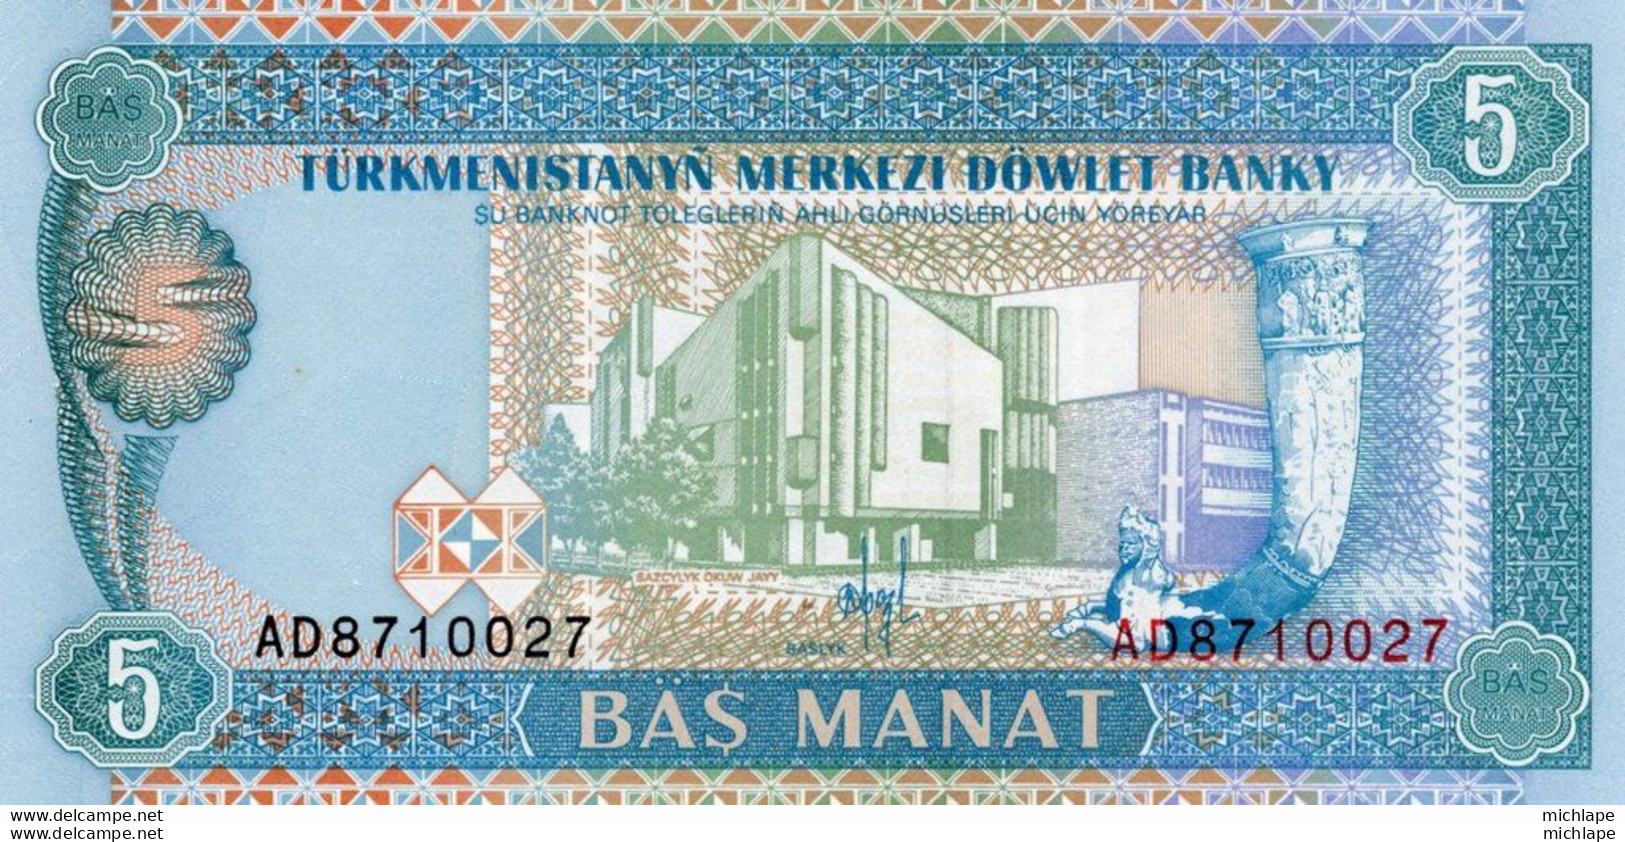 Billet, Turkmenistan, 5  Manat, 1995, NEUF - Albanien